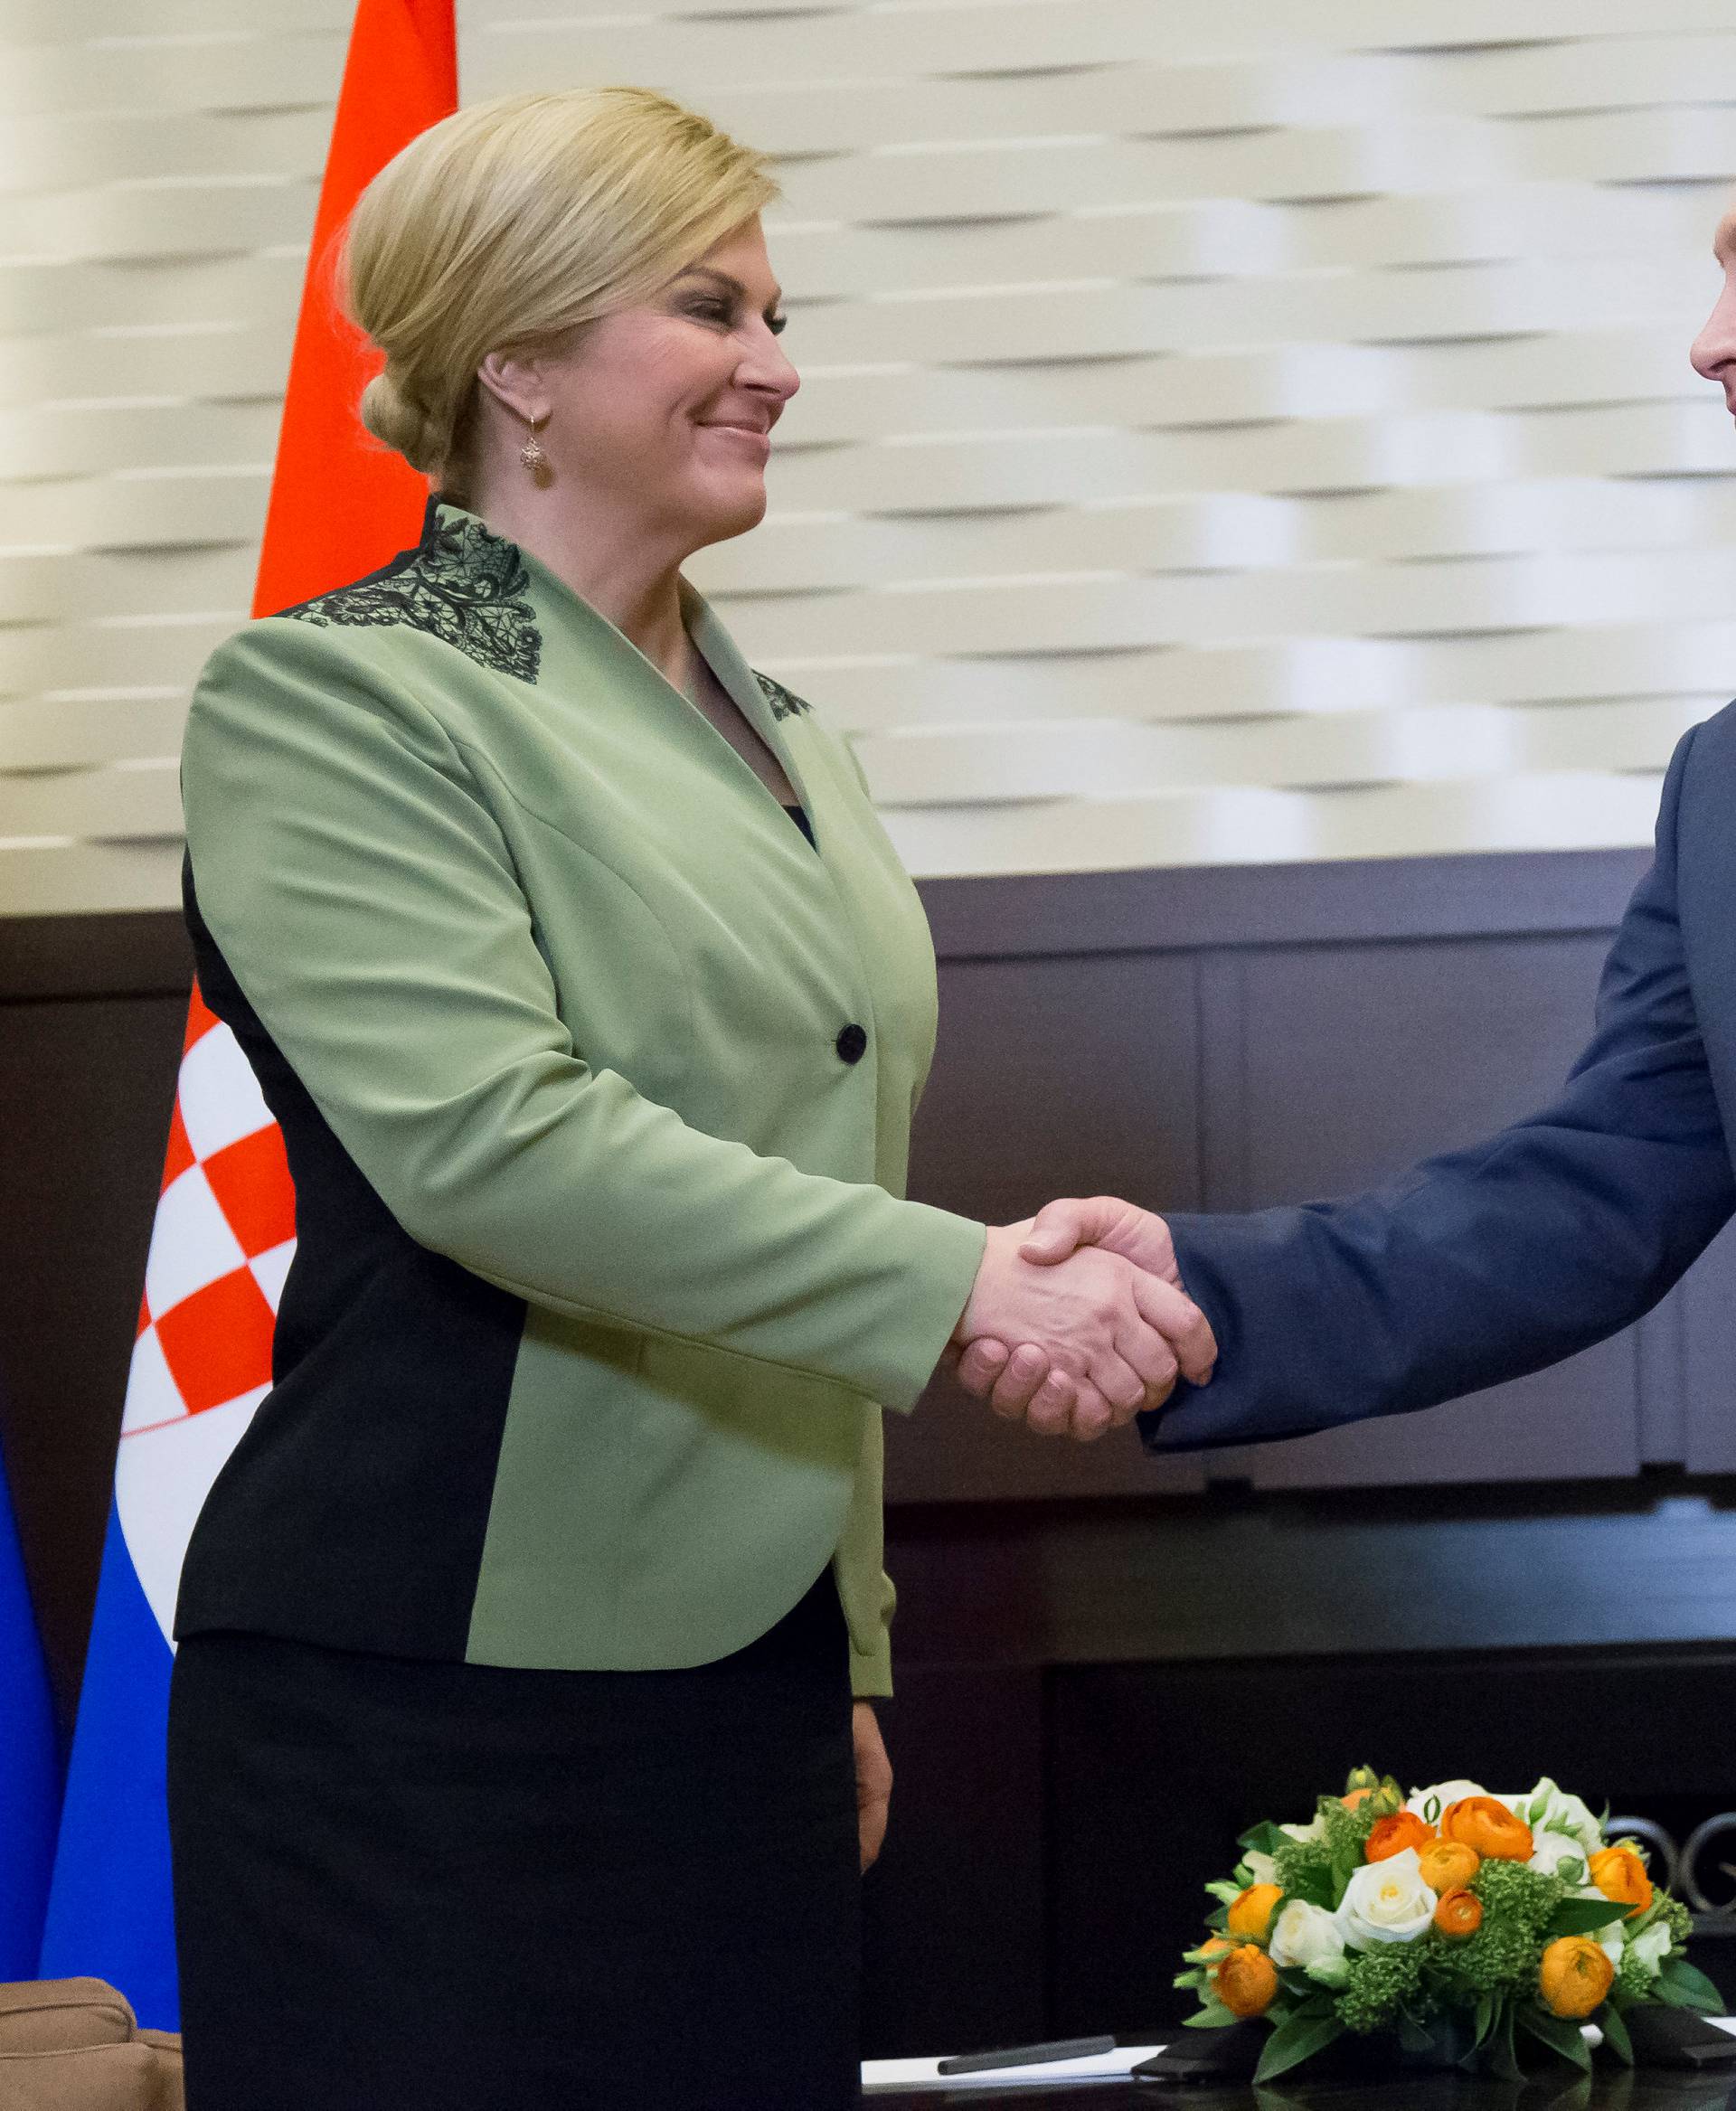 Putin shakes hands with Croatian President Grabar-Kitarovic during their meeting in Sochi